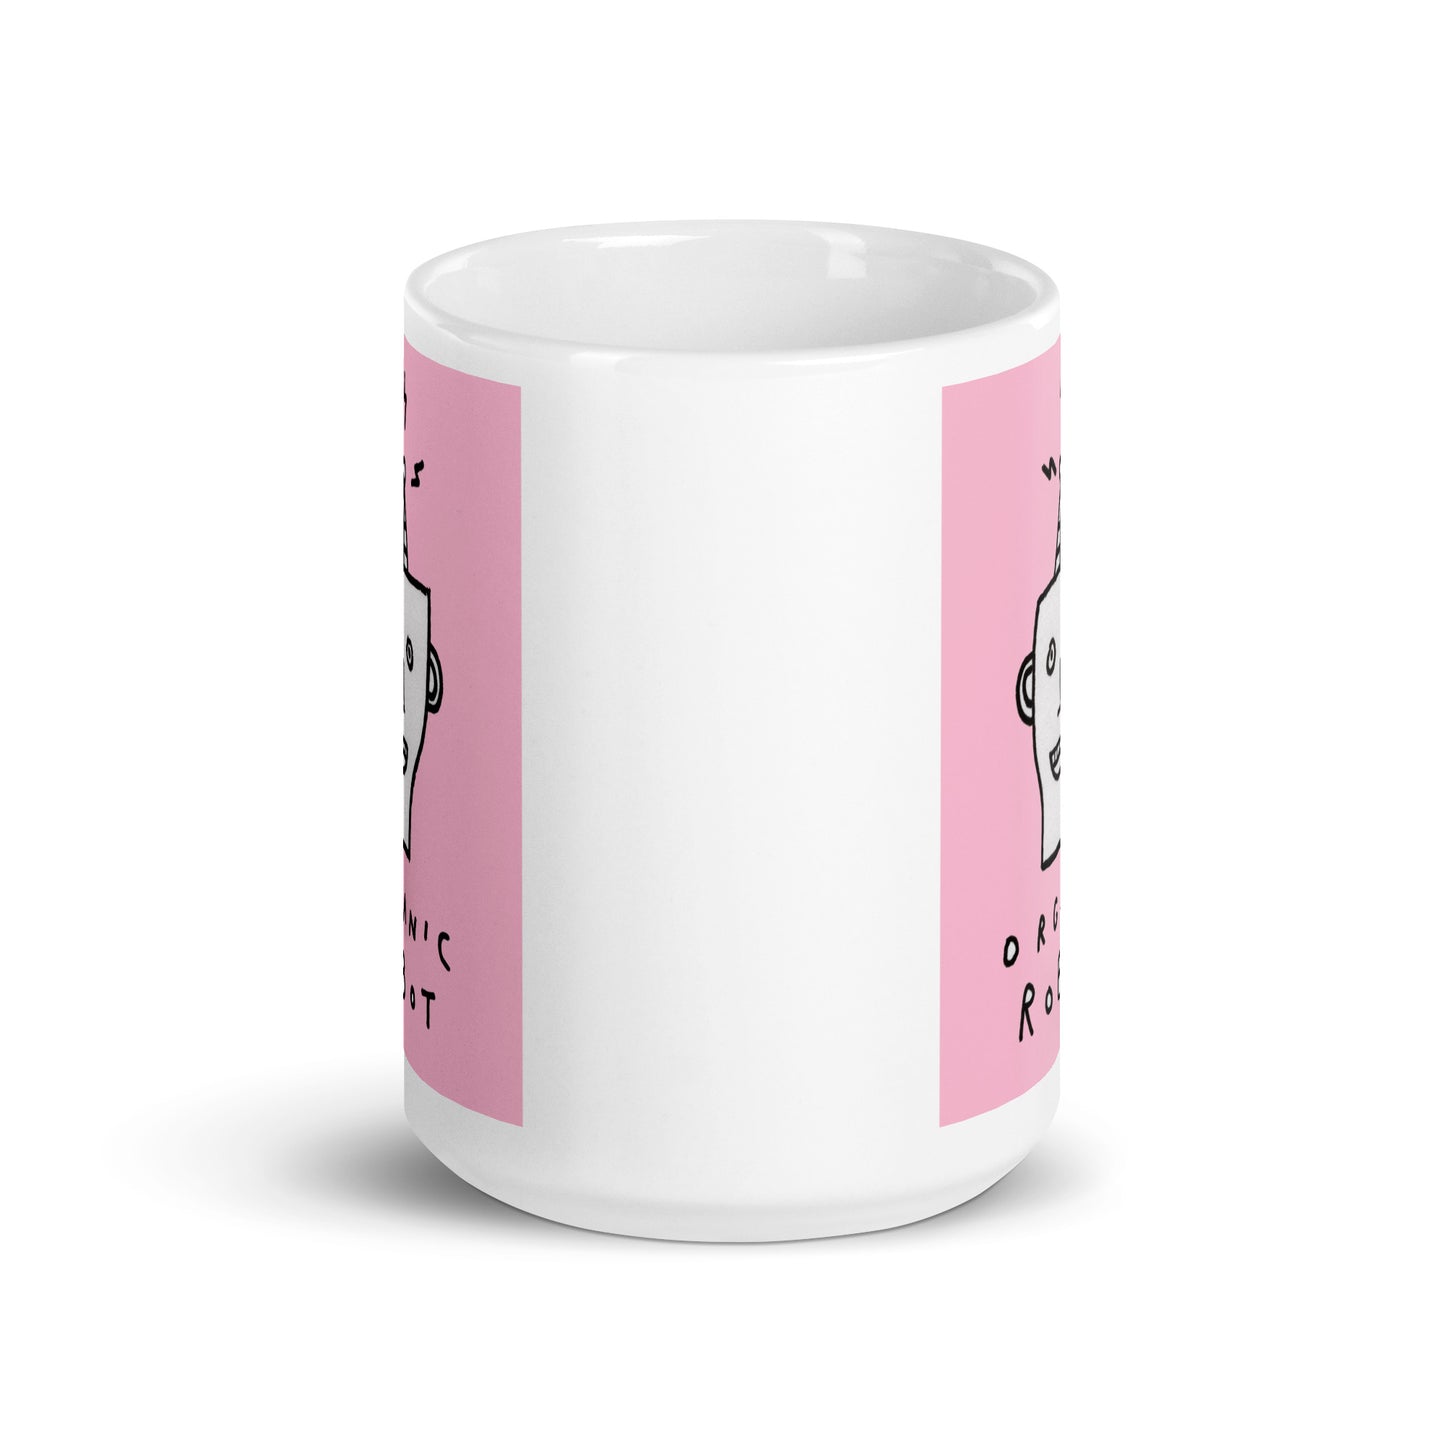 Organic Robot, Pink - White glossy mug